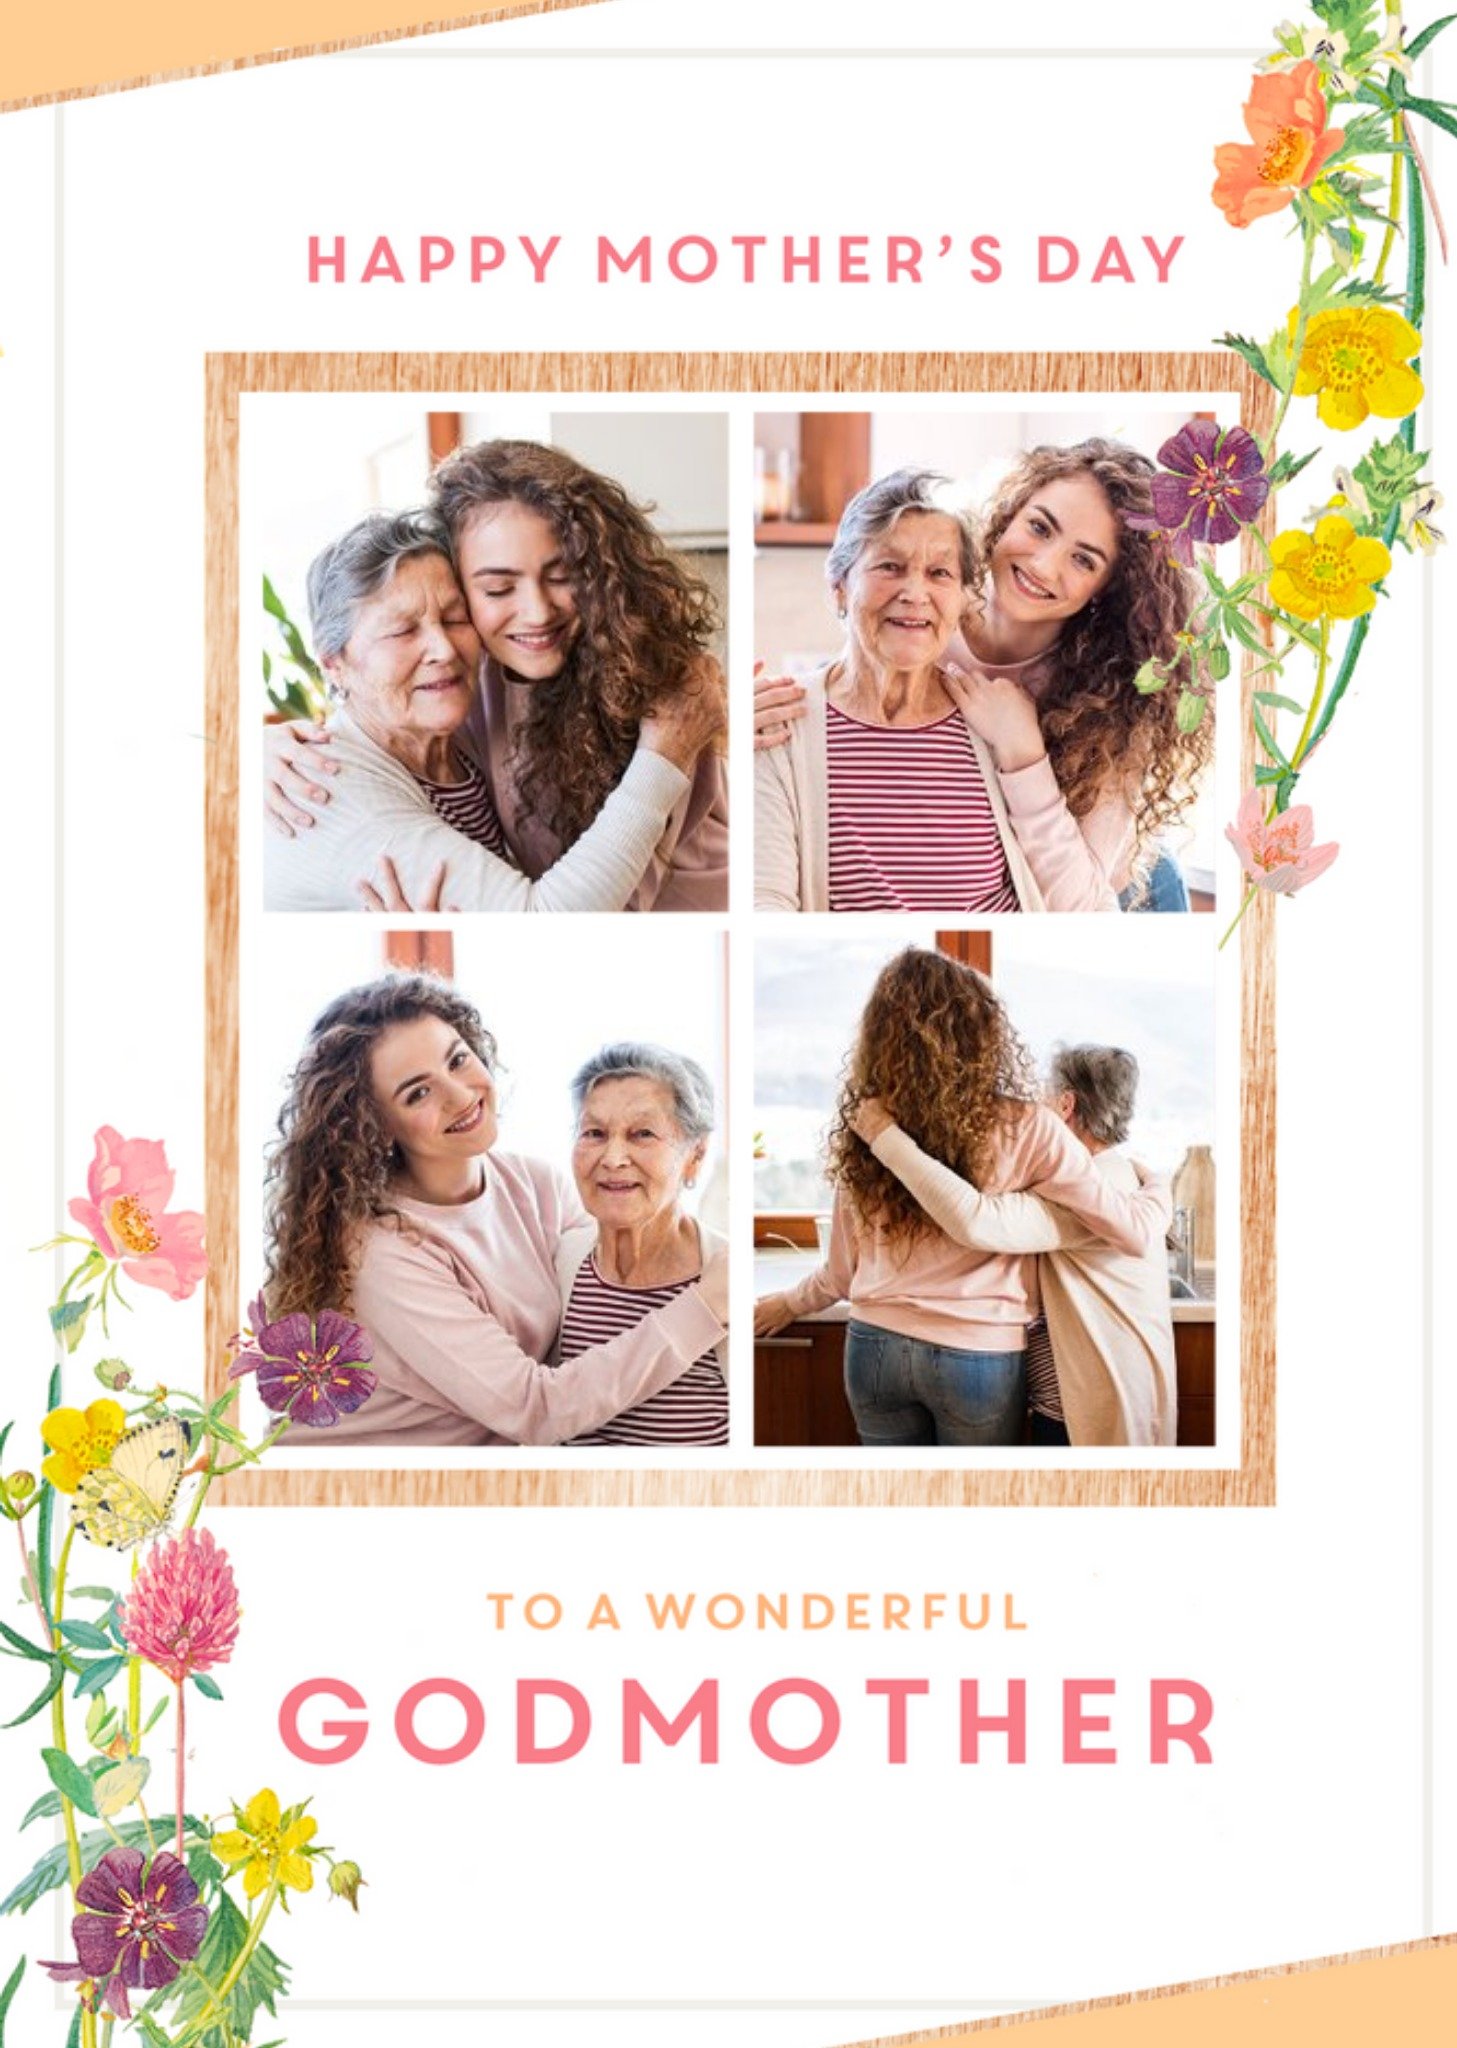 Edwardian Lady To A Wonderful Godmother Mother's Day Photo Upload Card Ecard